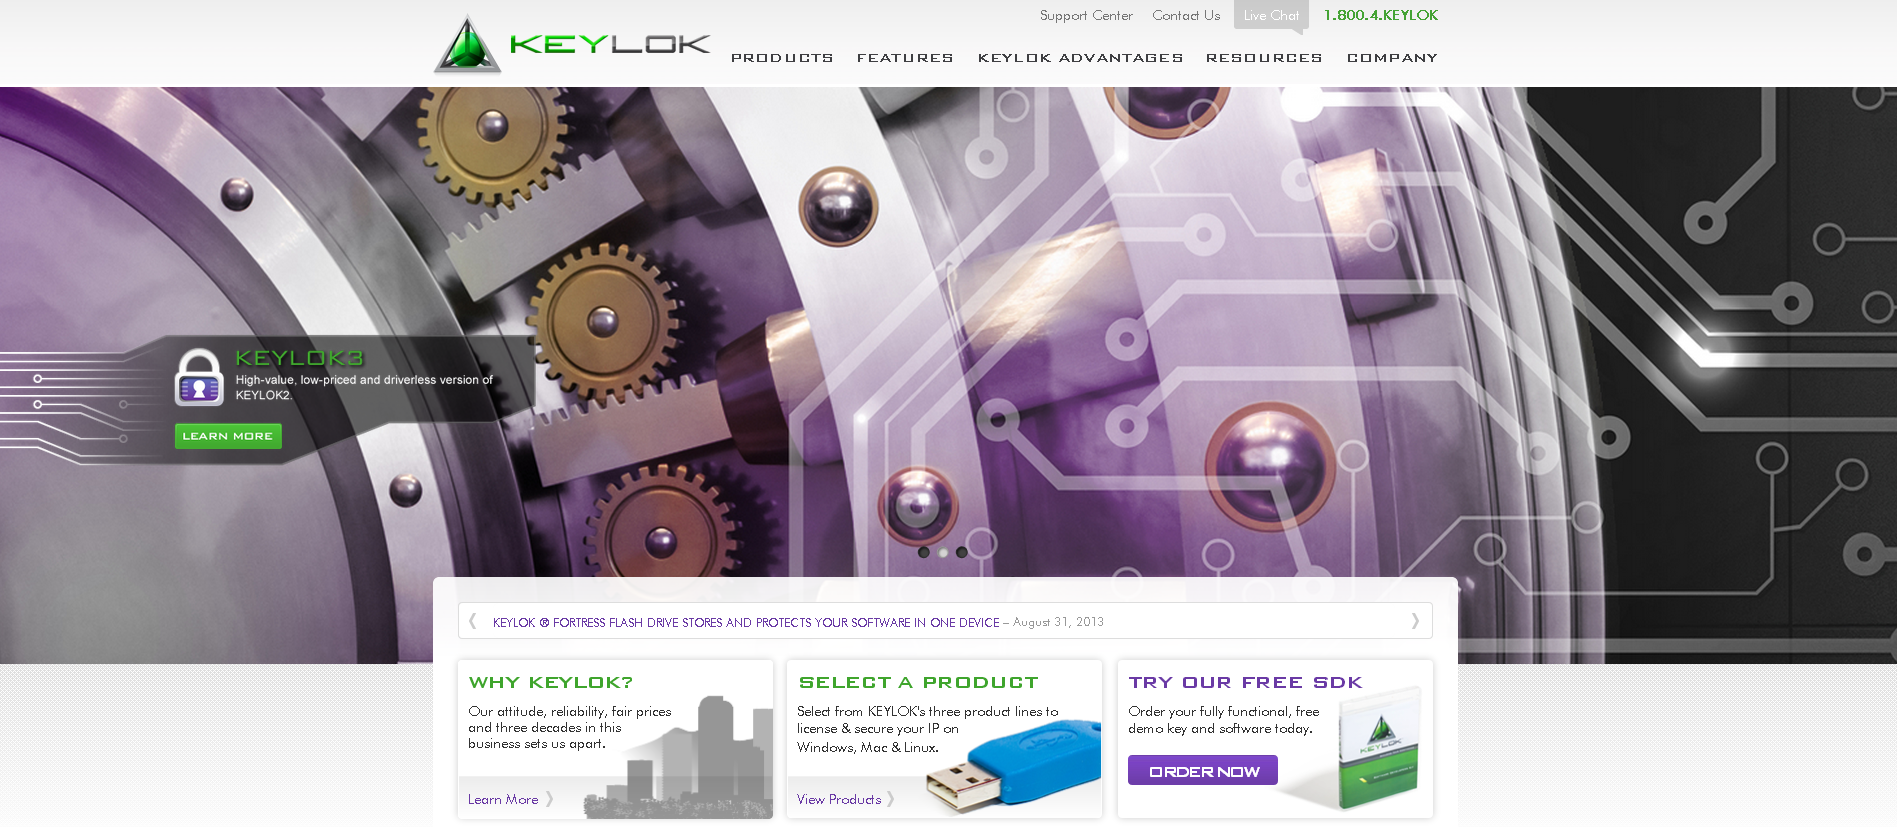 KEYLOK's New Homepage